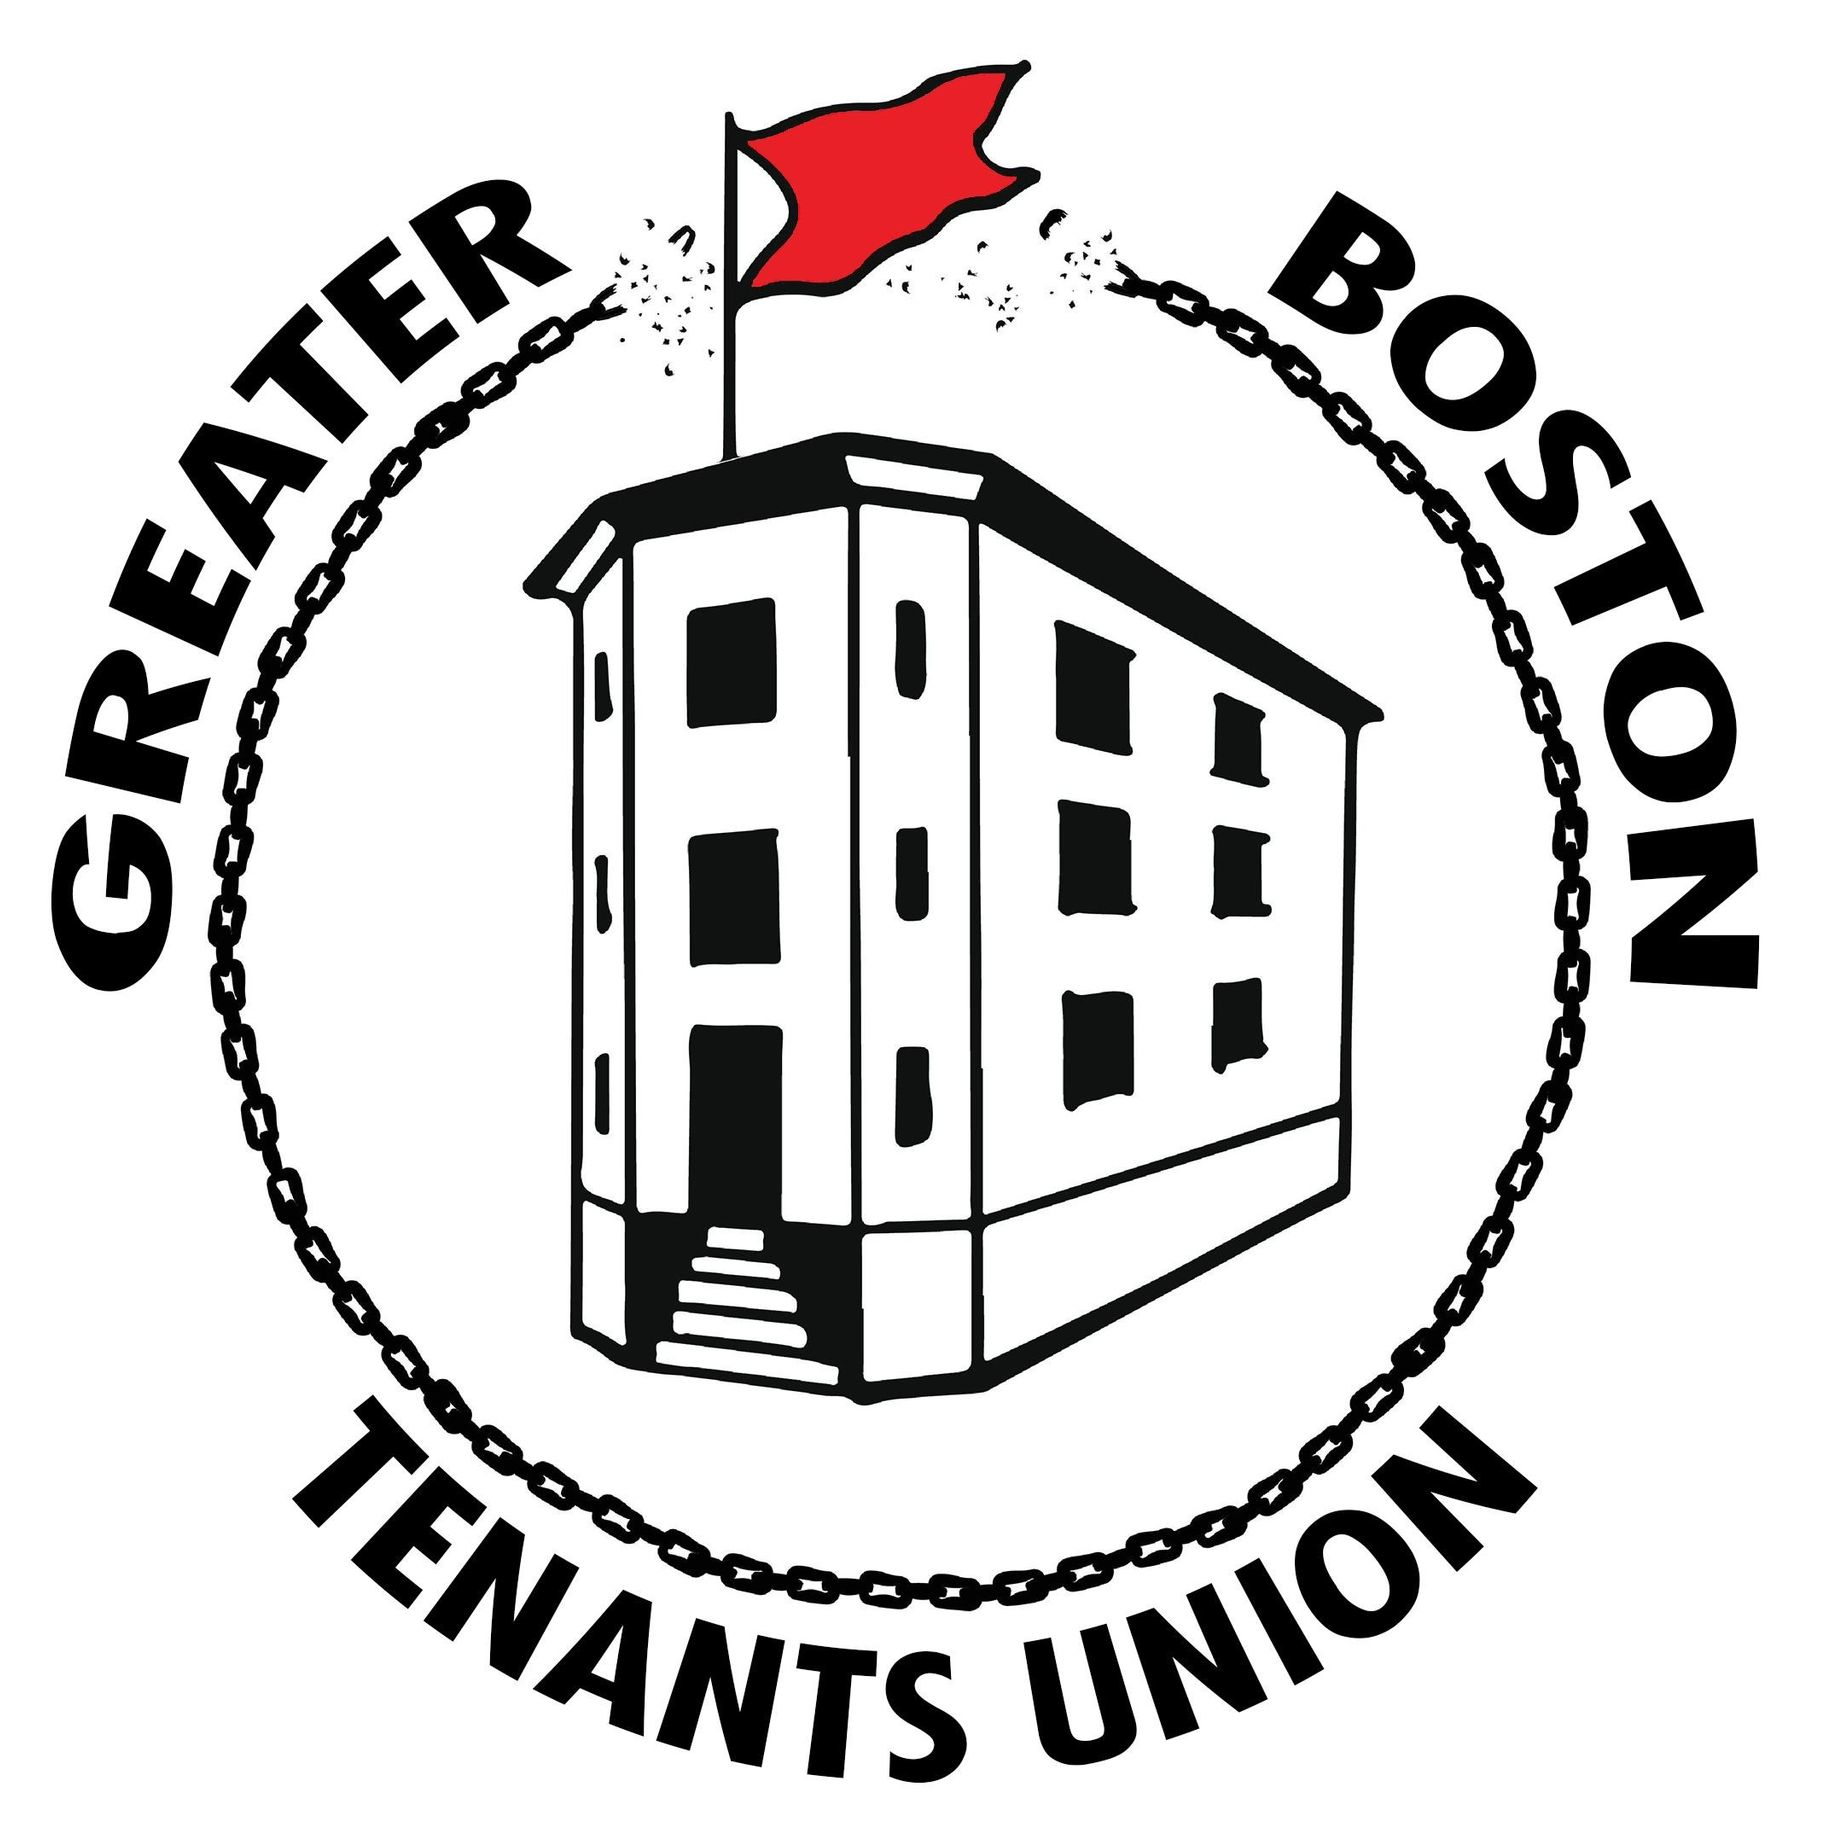 Greater Boston Tenants Union